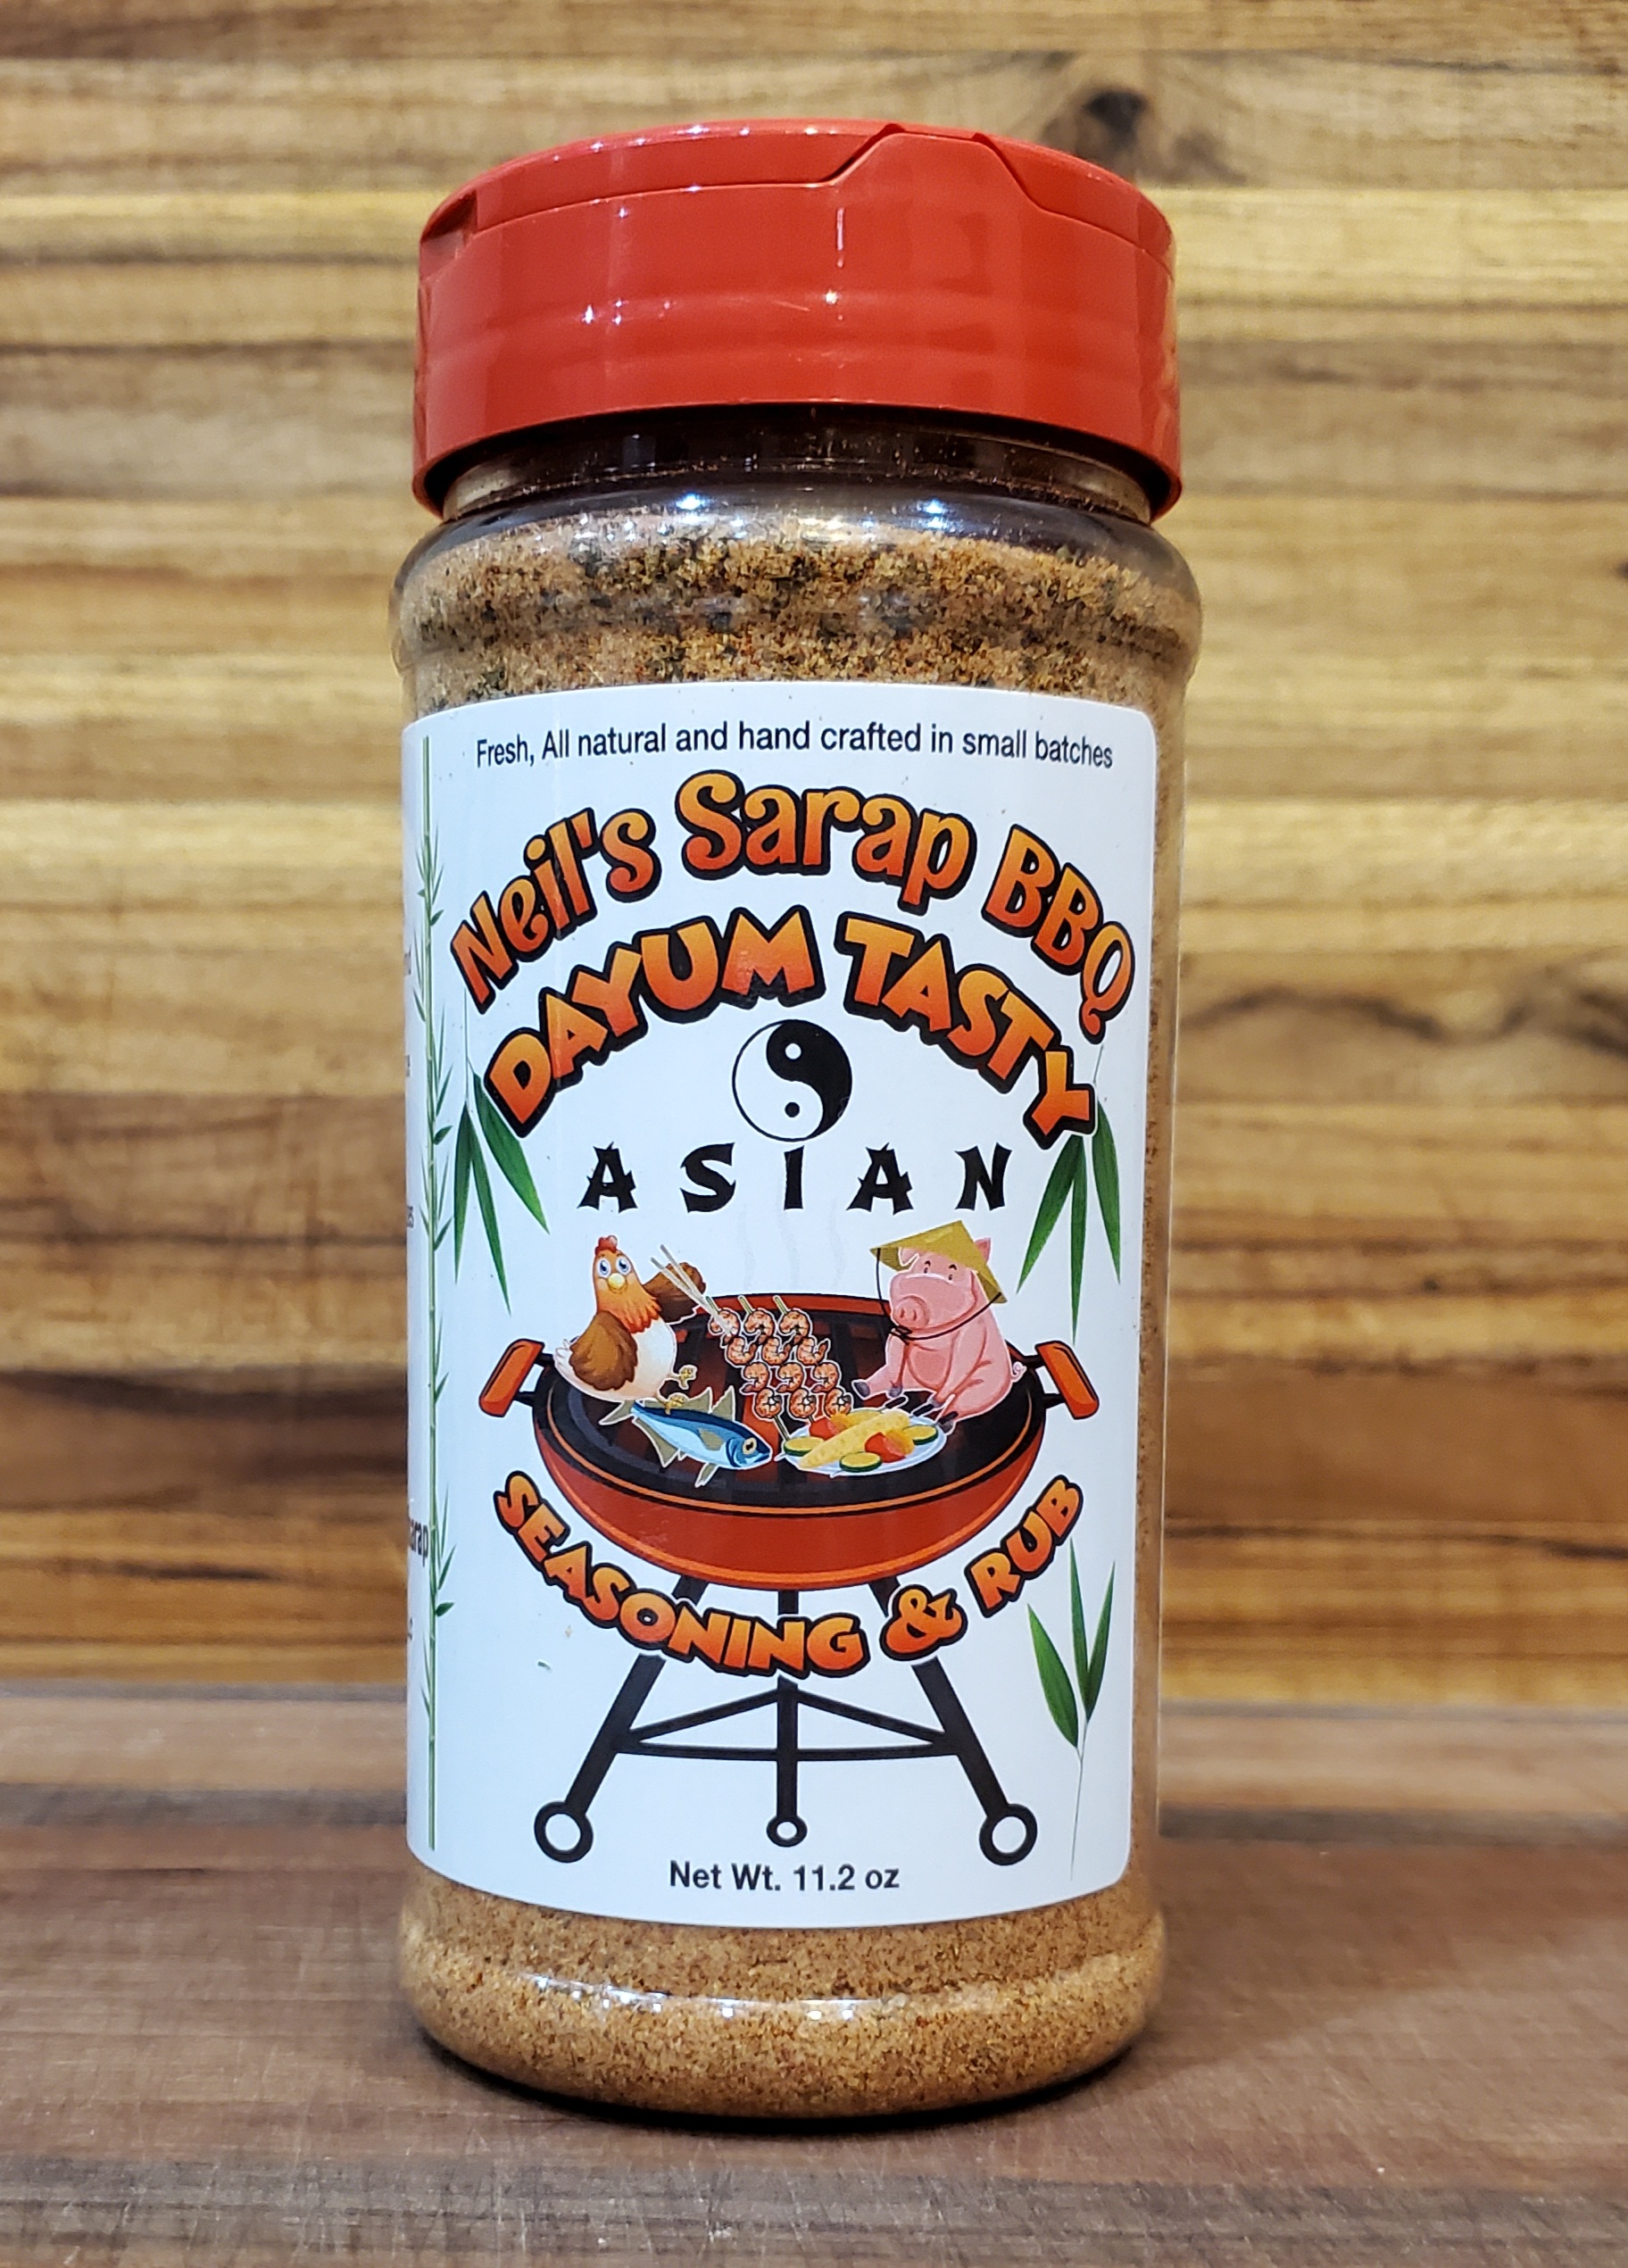 Neil's Sarap BBQ - Dayum Tasty Asian Seasoning & Rub